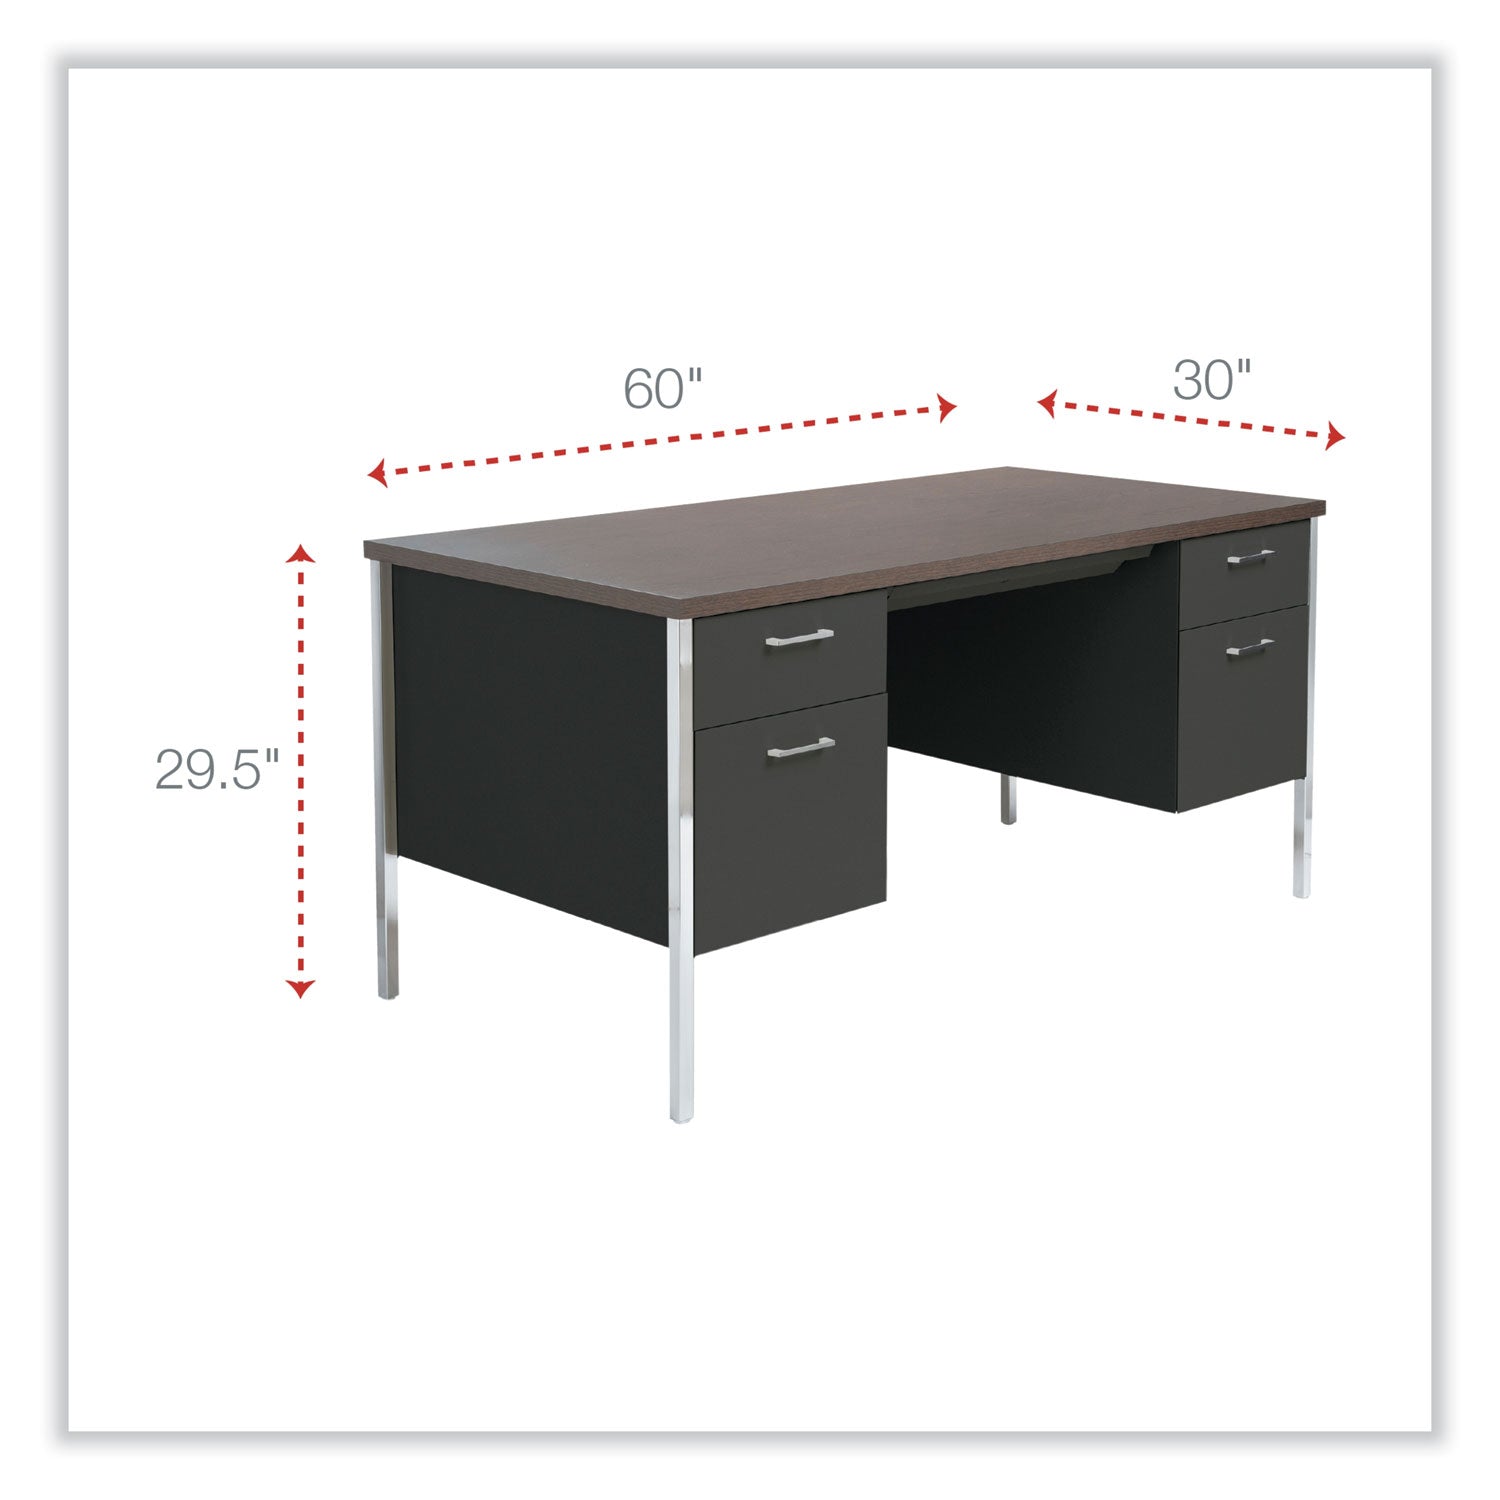 double-pedestal-steel-desk-60-x-30-x-295-mocha-black-chrome-plated-legs_alesd6030bm - 2